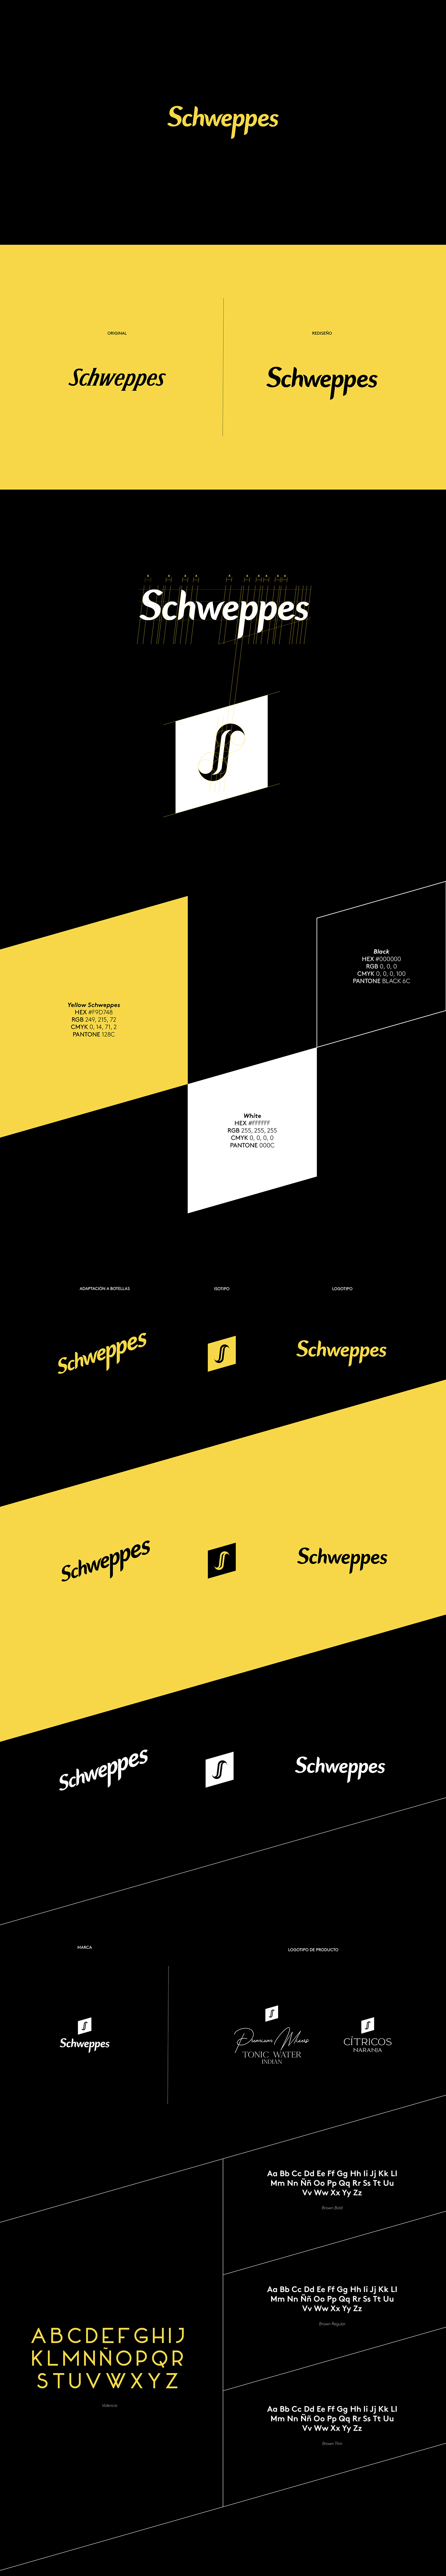 corporativa corporative identidad identity logo redesign rediseño schweppes corporate rebranding